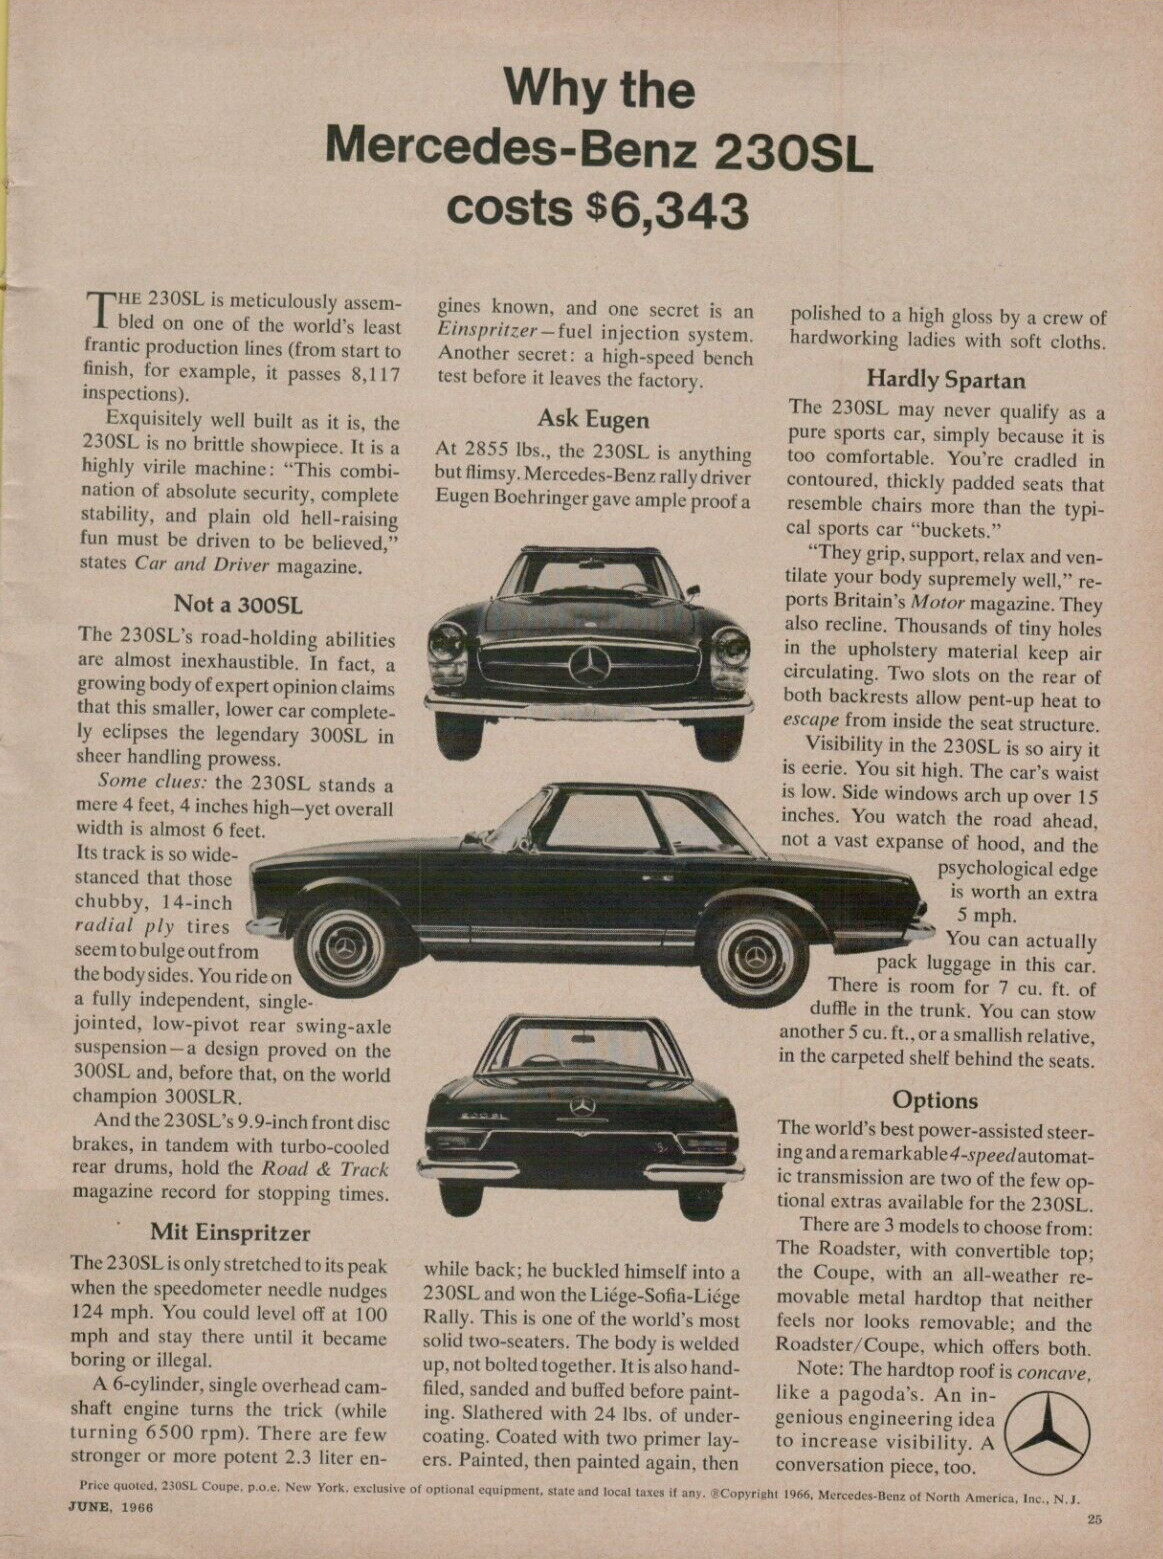 1966 Mercedes-Benz 230SL Highly Virile Machine 2-door Coupe Original Print Ad